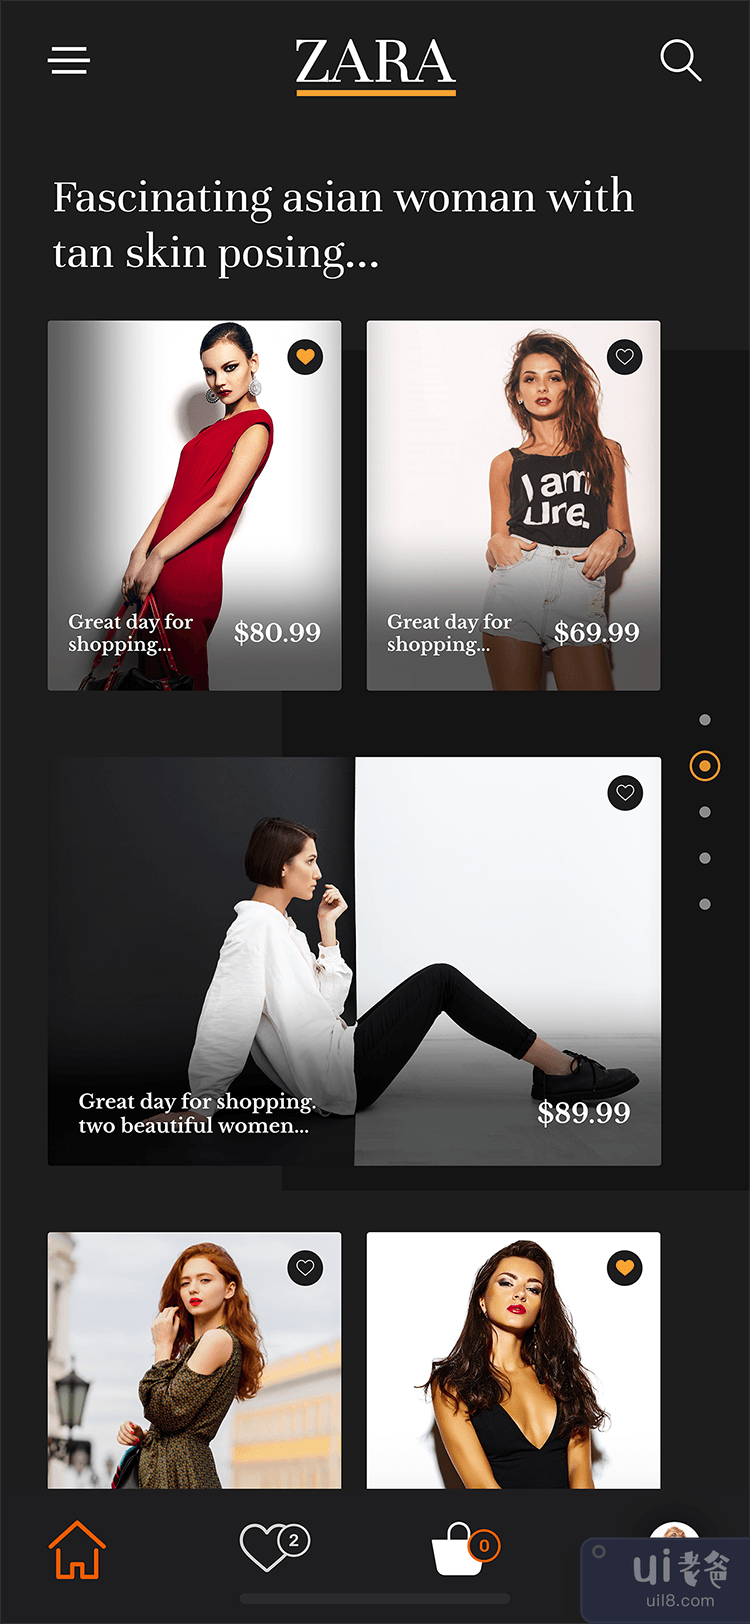 Zara 时尚 - iOS 应用(Zara fashion - iOS App)插图2